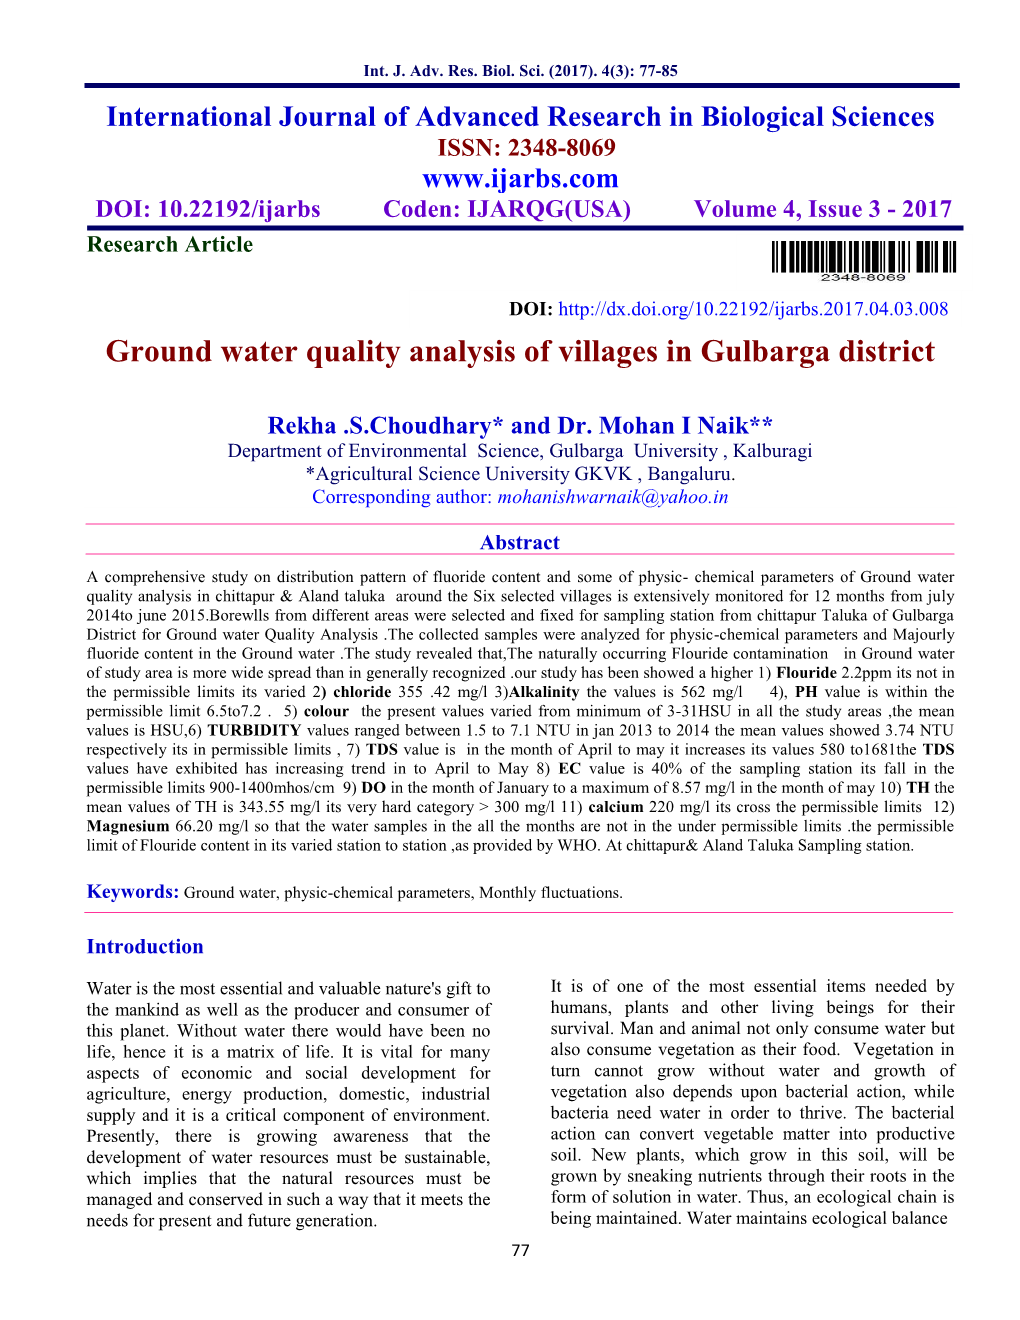 Ground Water Quality Analysis of Villages in Gulbarga District